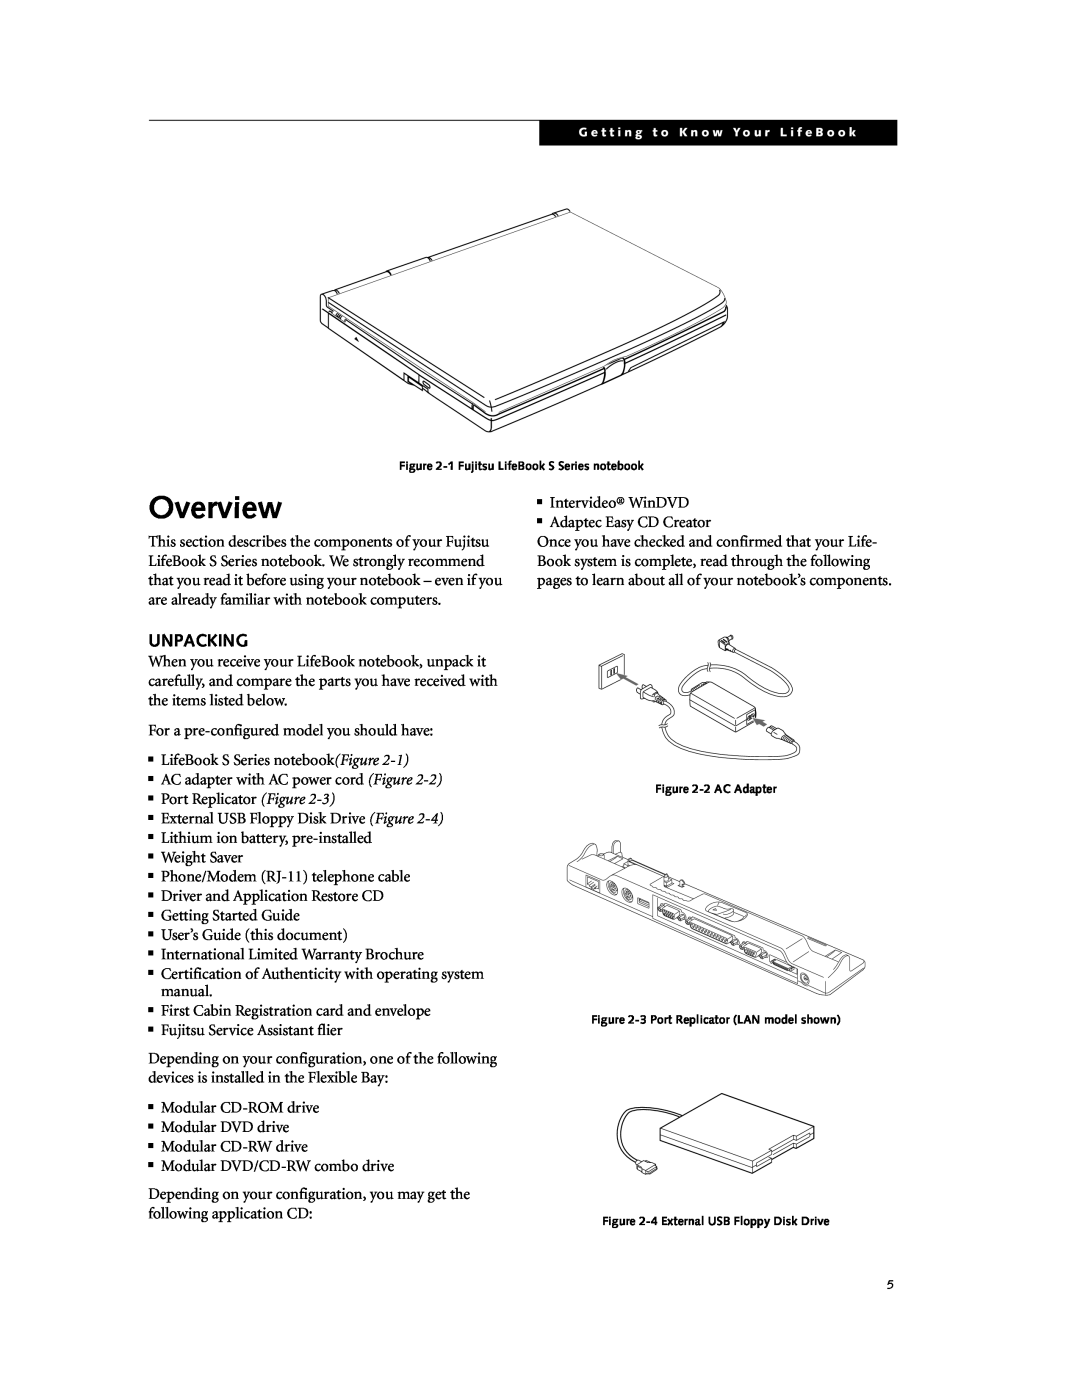 Fujitsu DVD Player manual Overview, Unpacking 